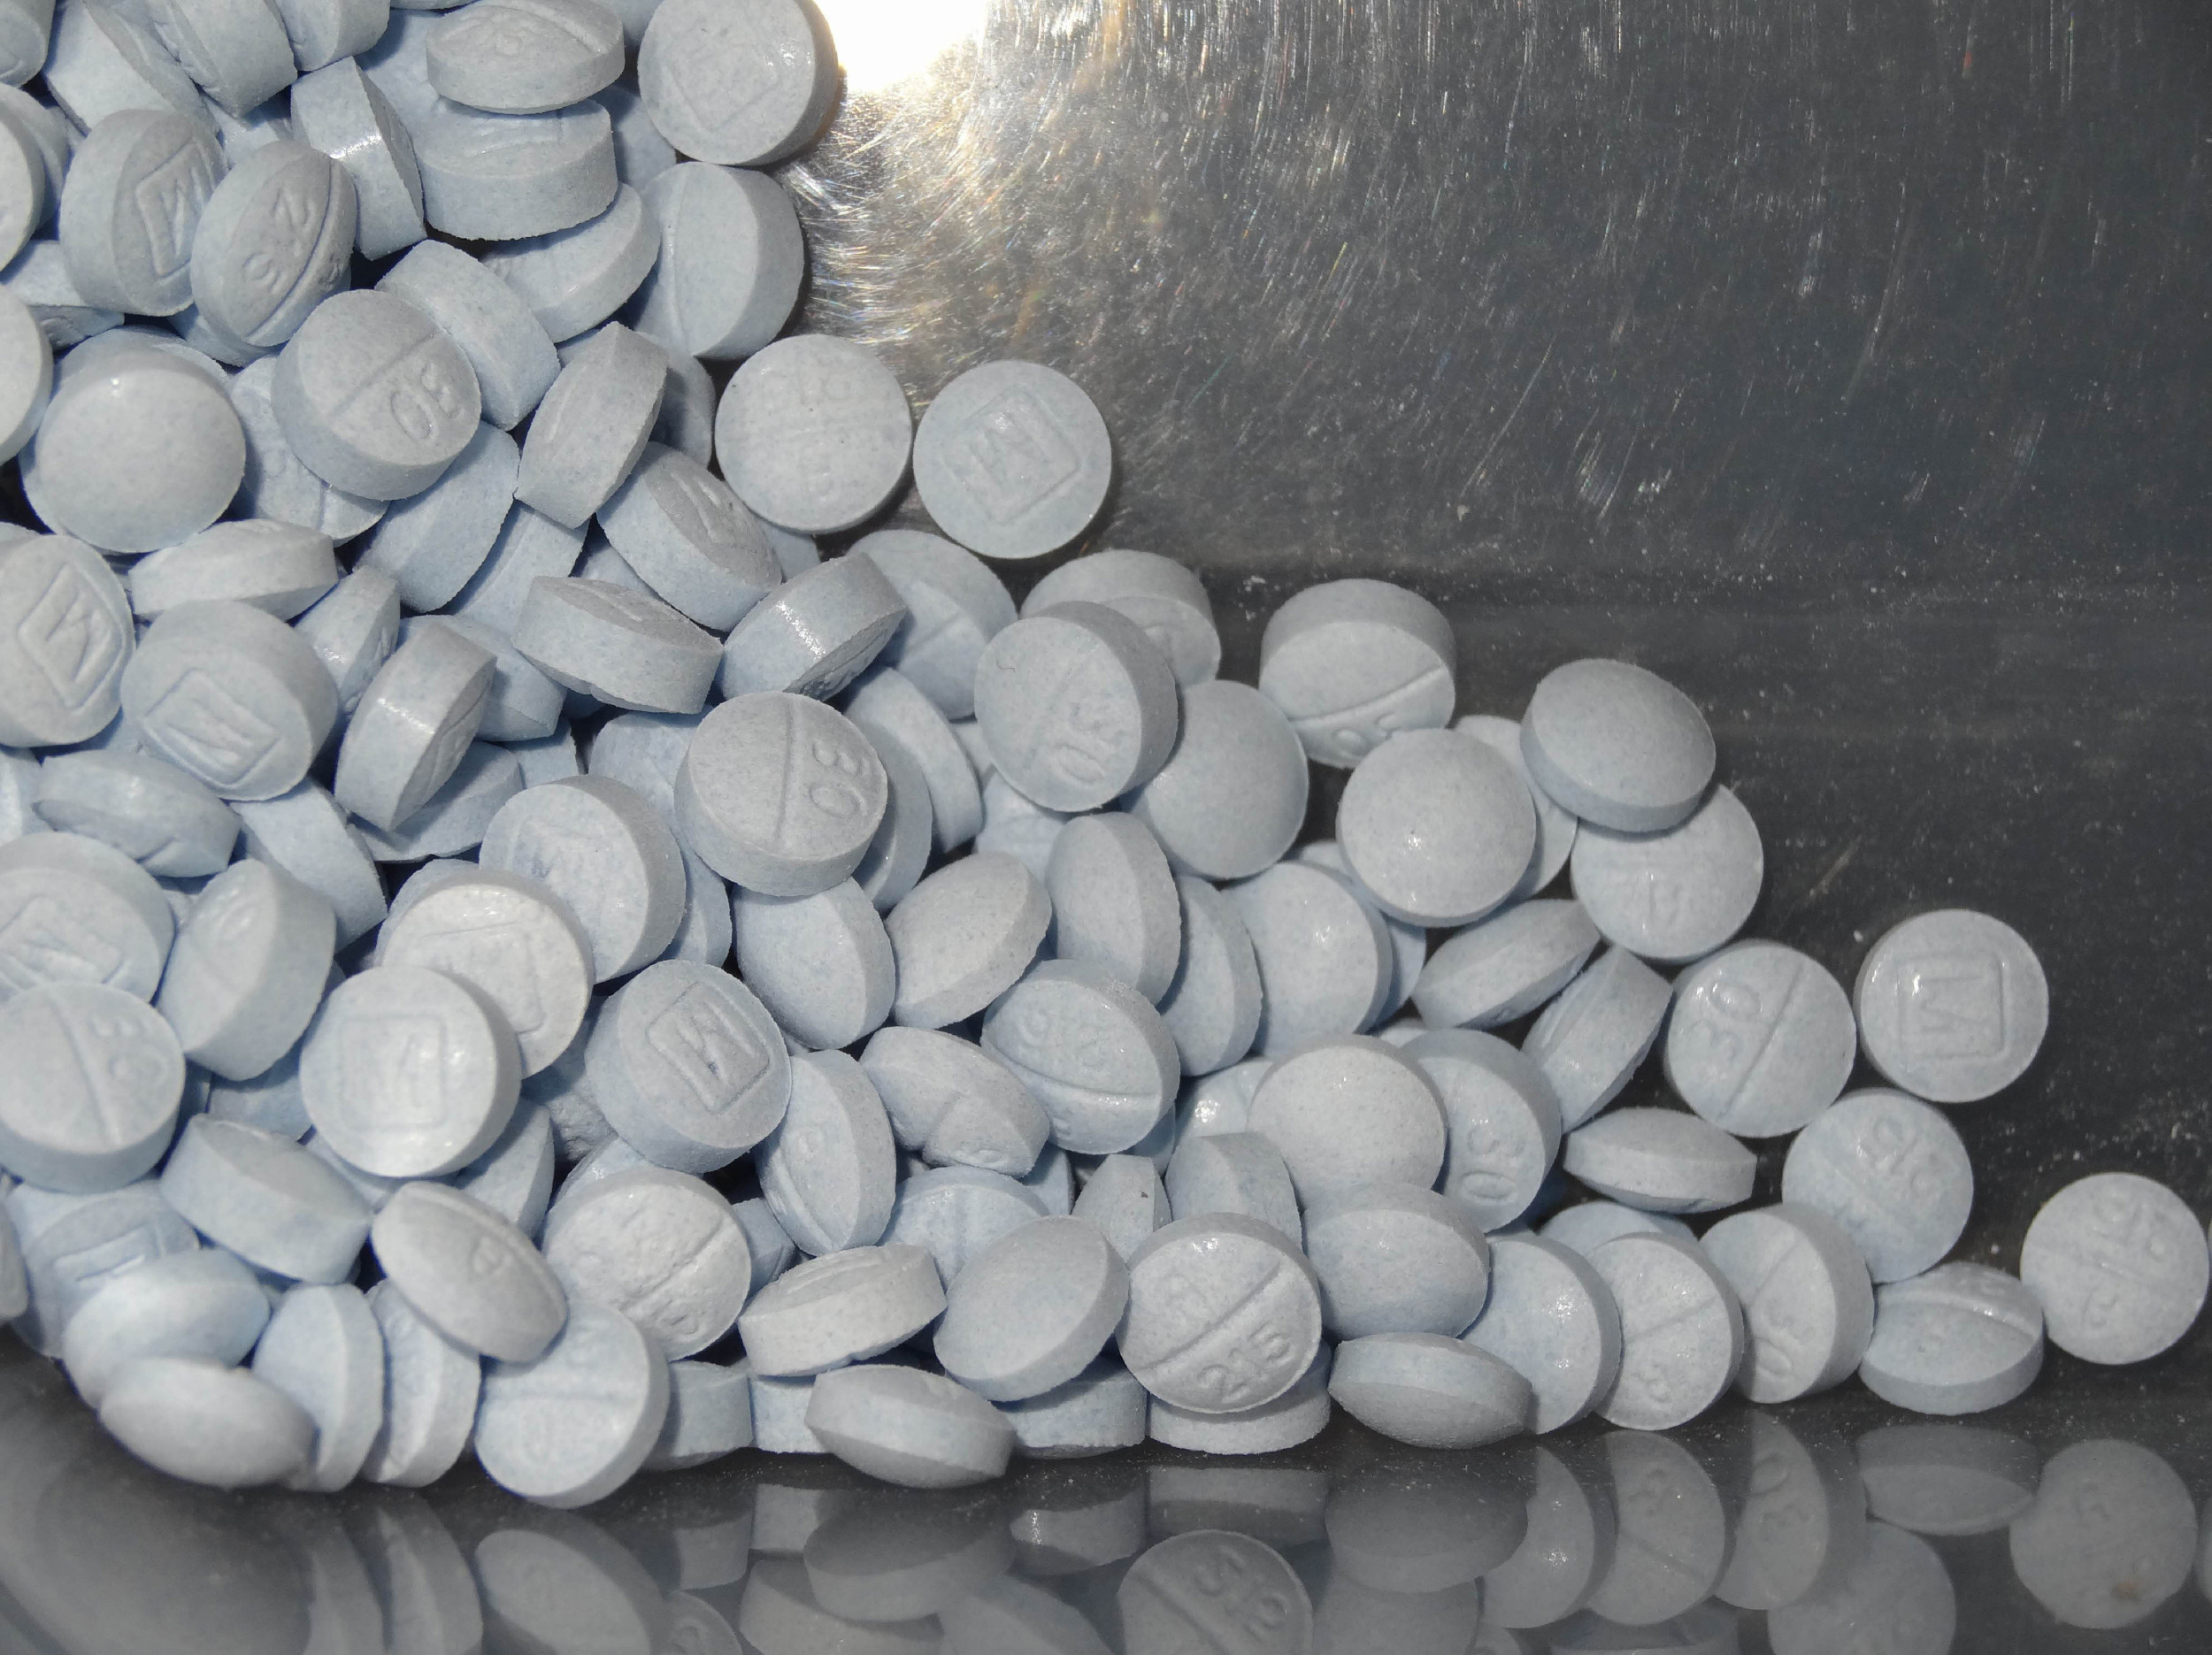 newsweek.com - Billal Rahman - Border agents seize 50 pounds of purple fentanyl designed for kids